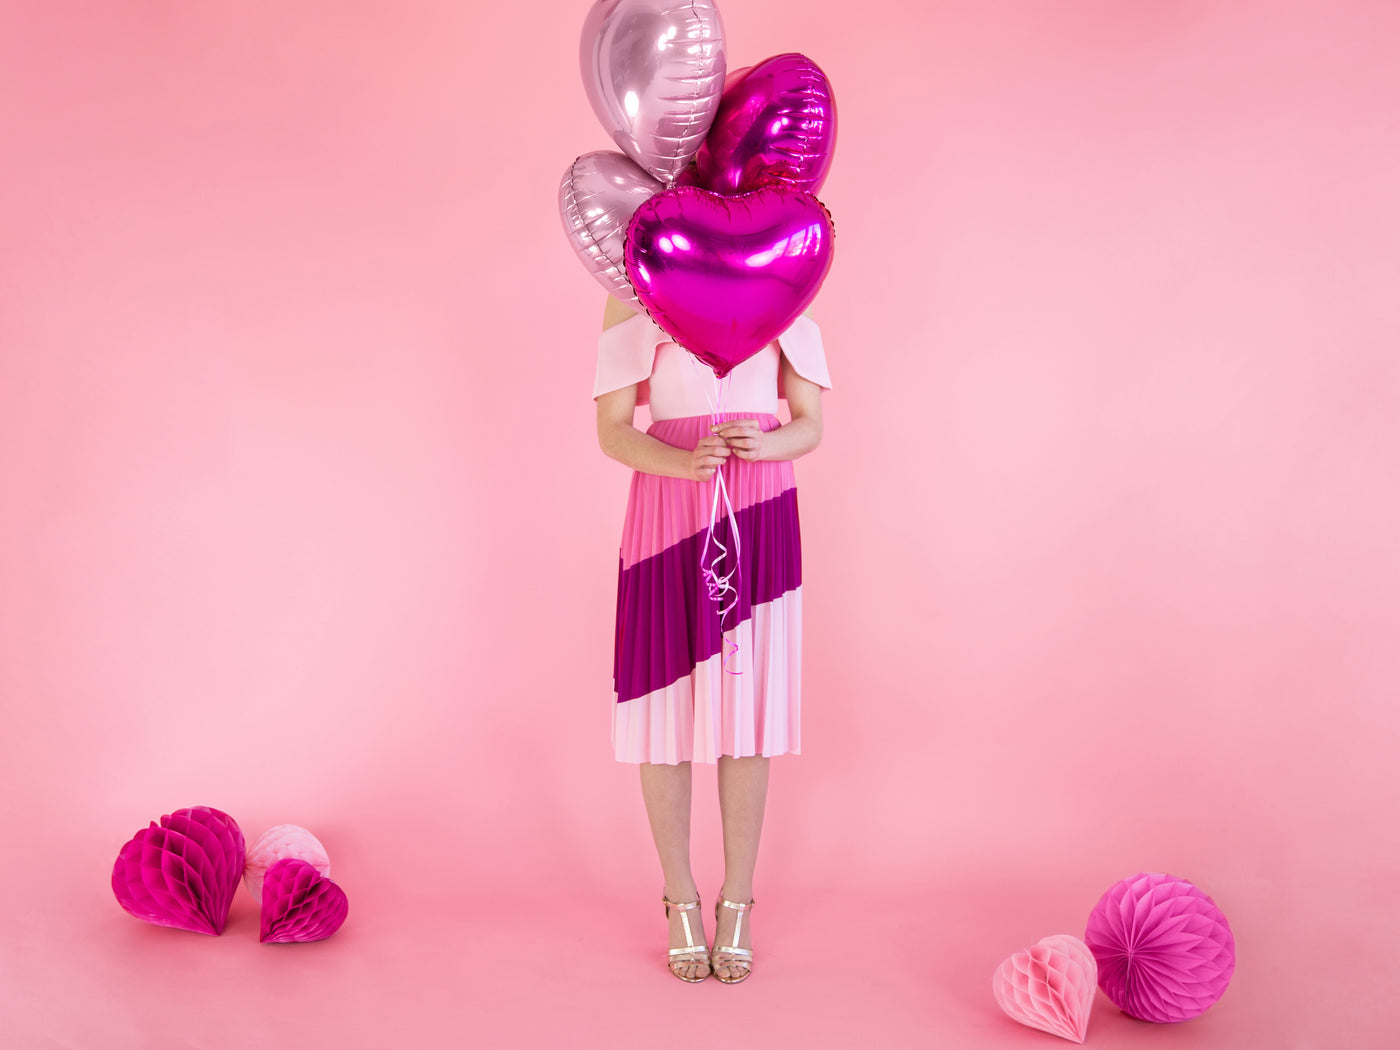 Heart Foil Balloon, dark pink